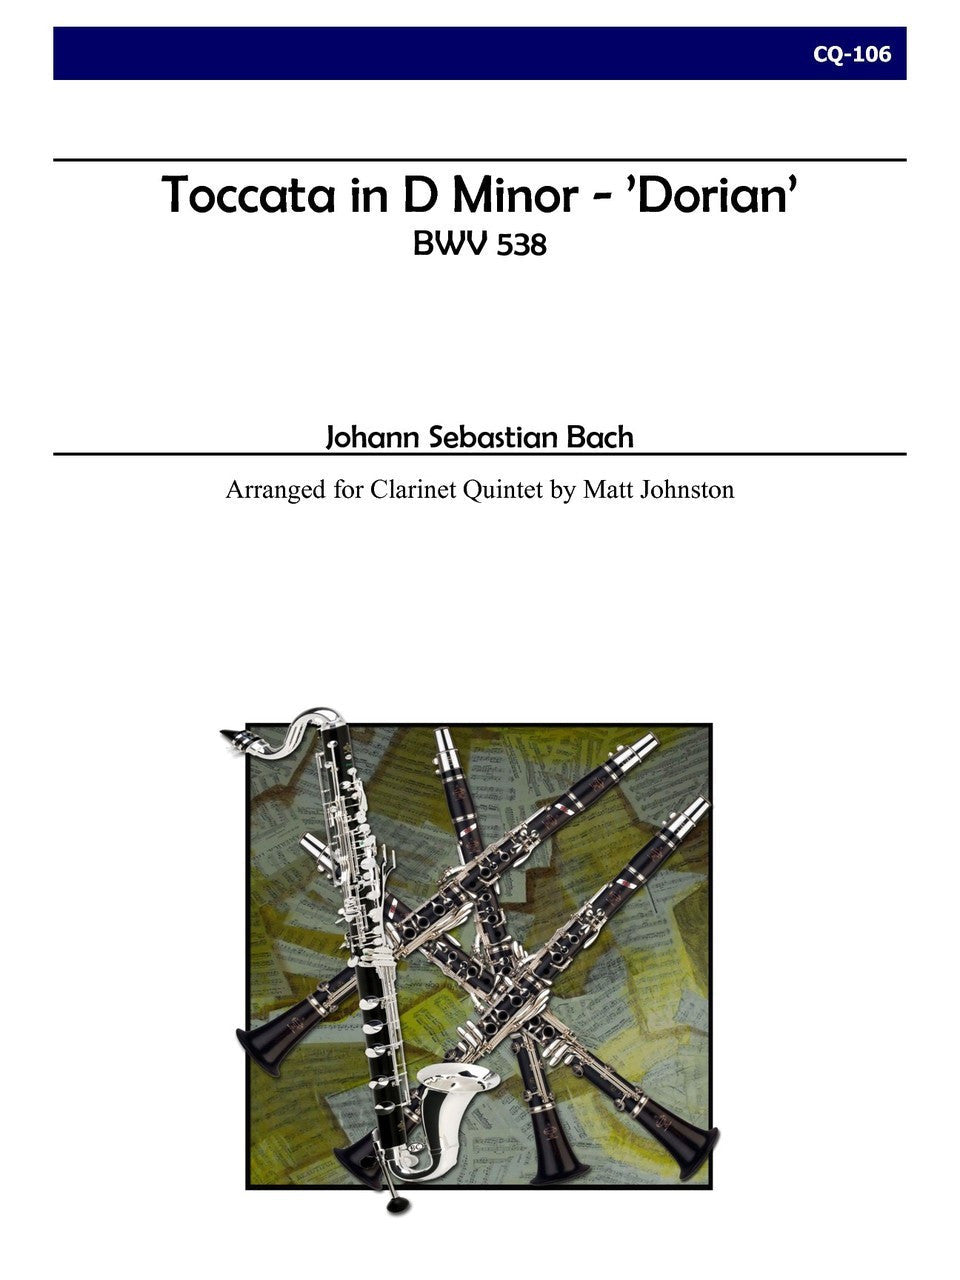 Bach (arr. Matt Johnston) - Toccata in D Minor — ’Dorian’ for Clarinet Quintet